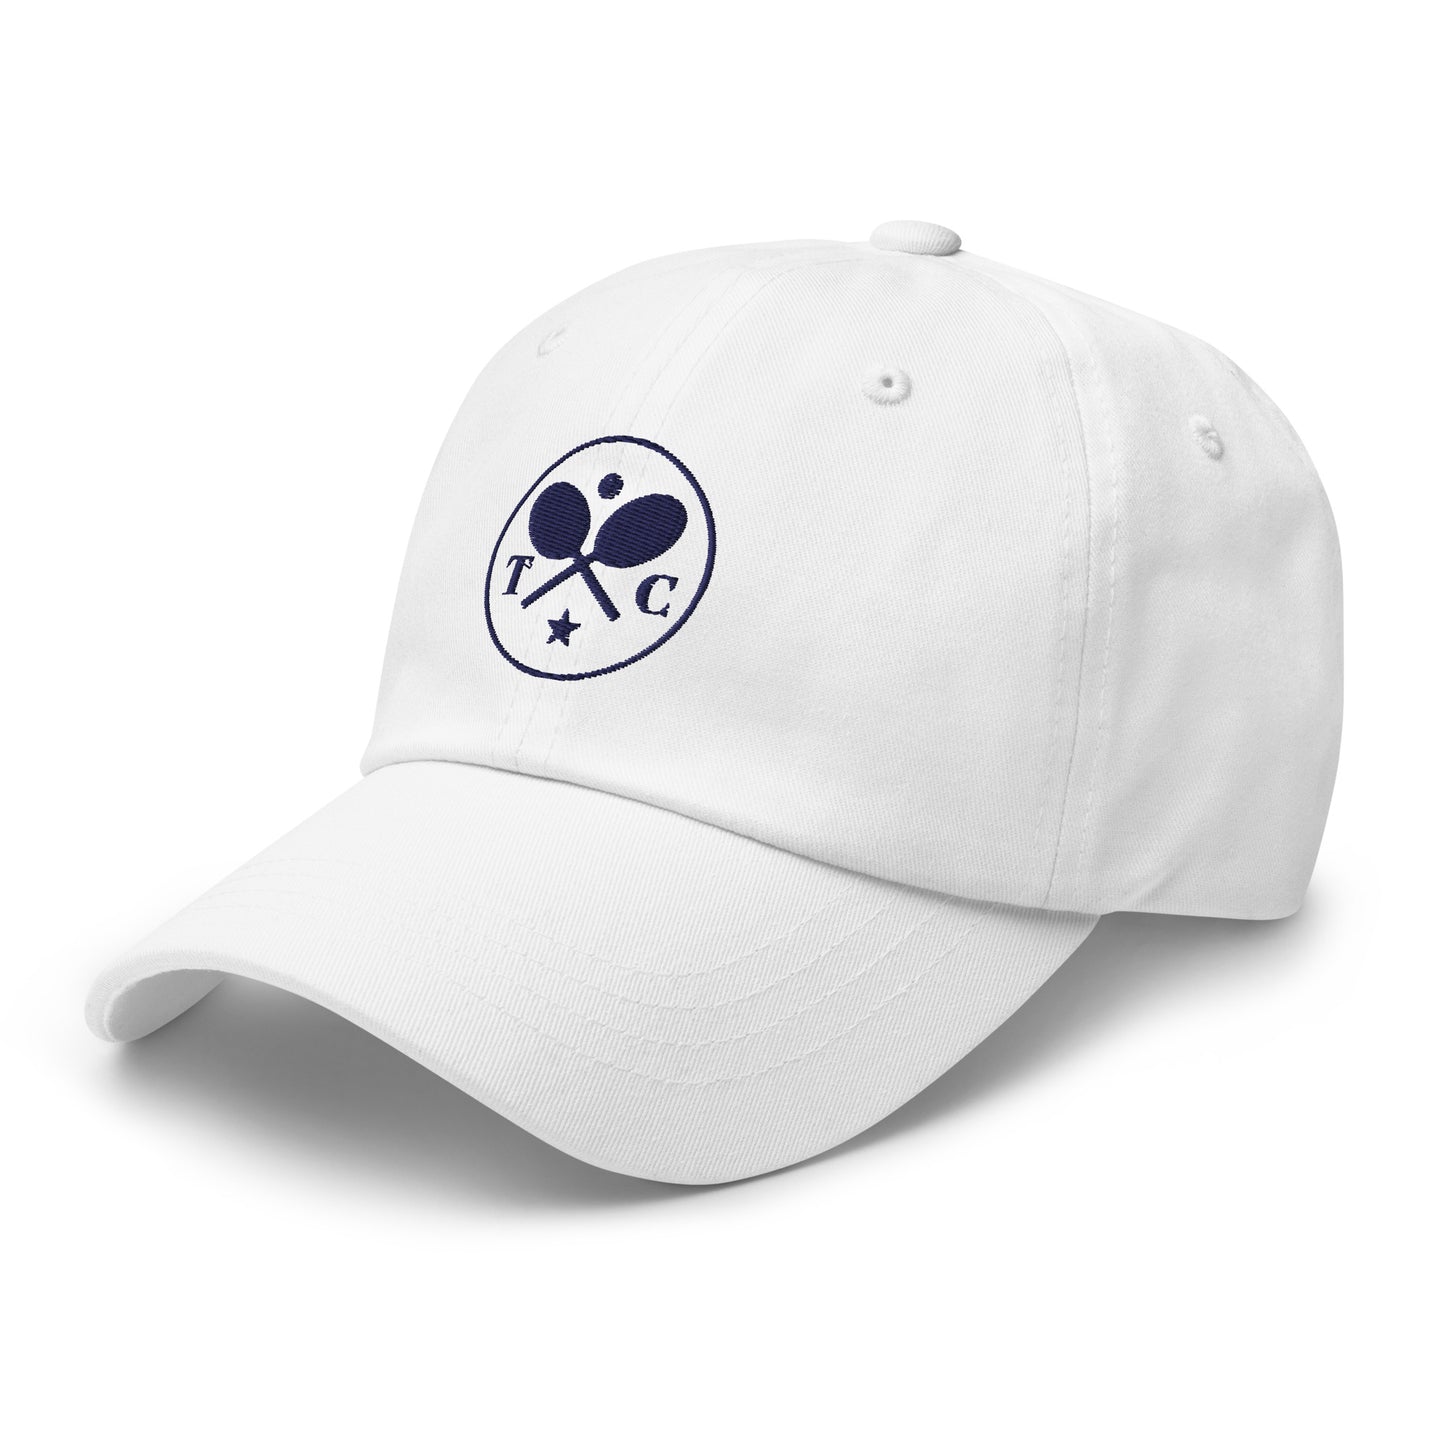 Tarry Crest tennis team unisex hat